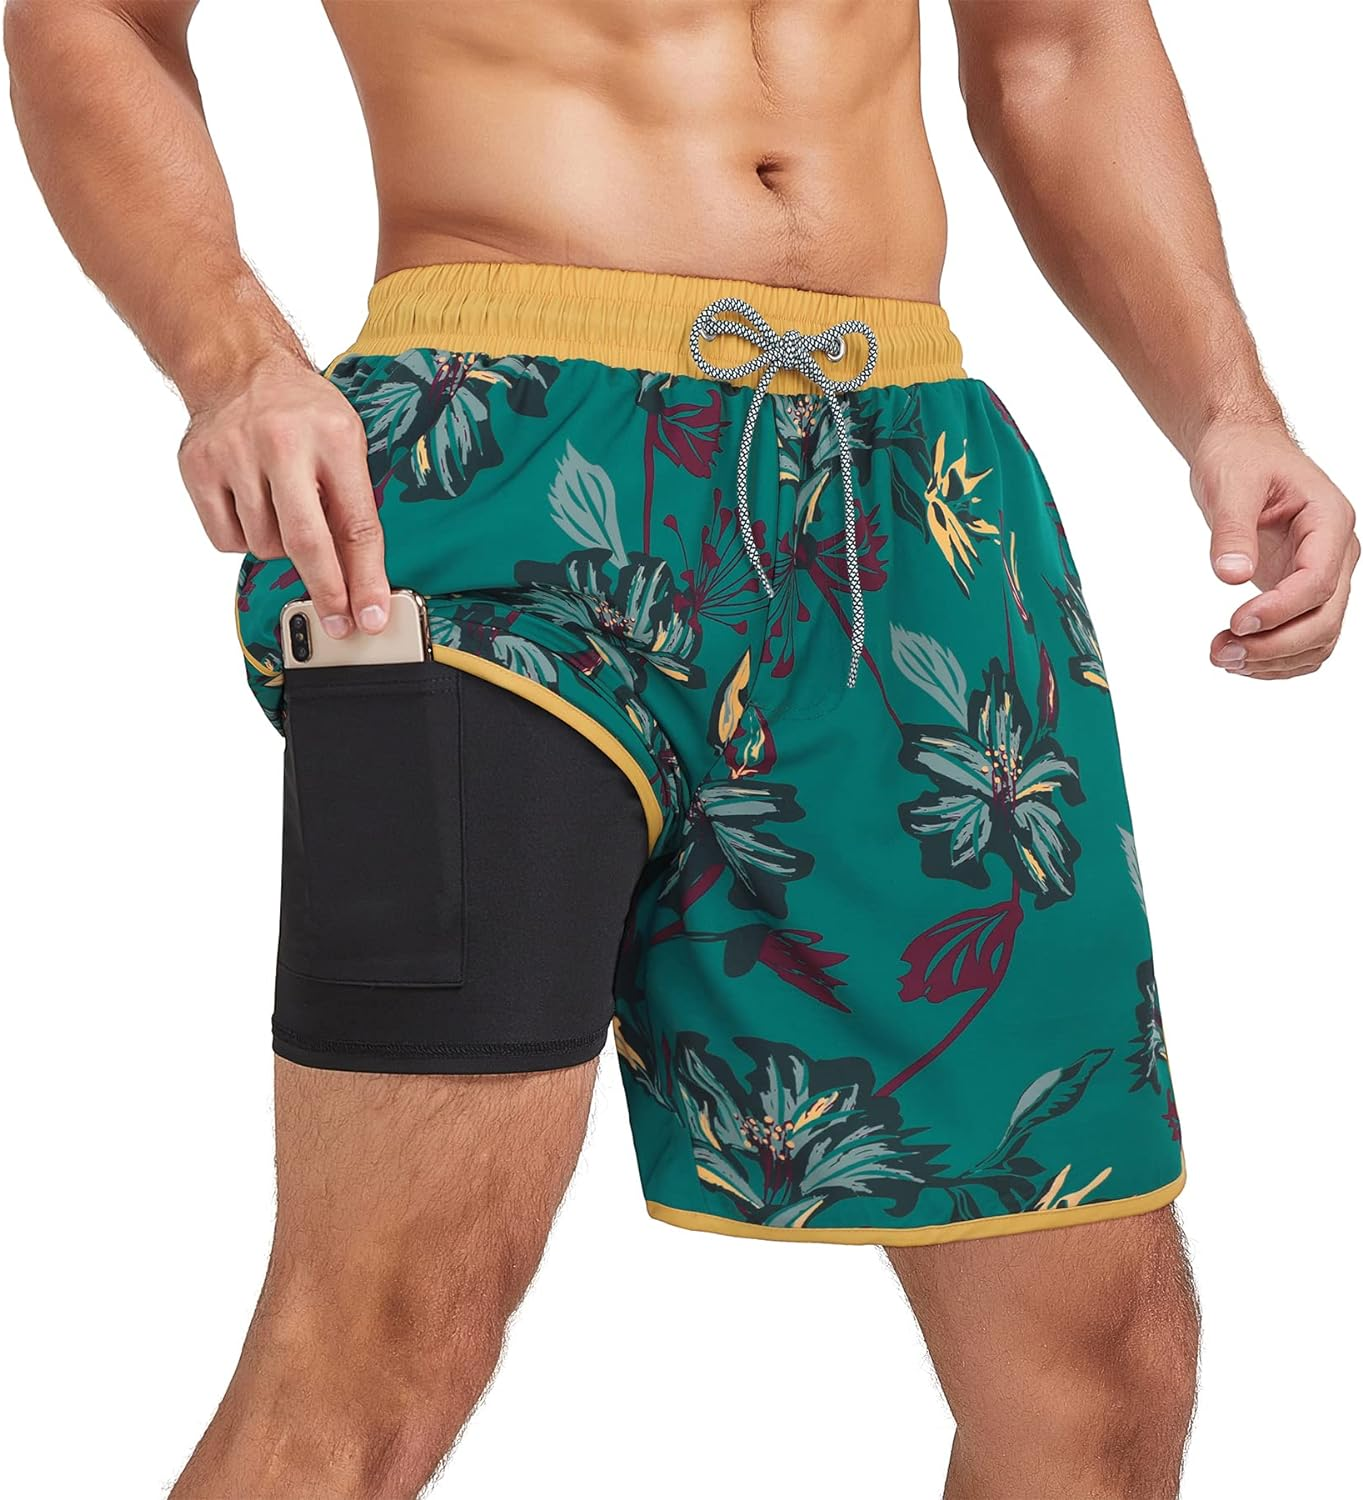 Zando Mens Swim Trunks Quick Dry Beach Shorts for Men Bathing Suits Beach Wear Mens Swim Shorts with Compression Liner | Amazon.com $7.49